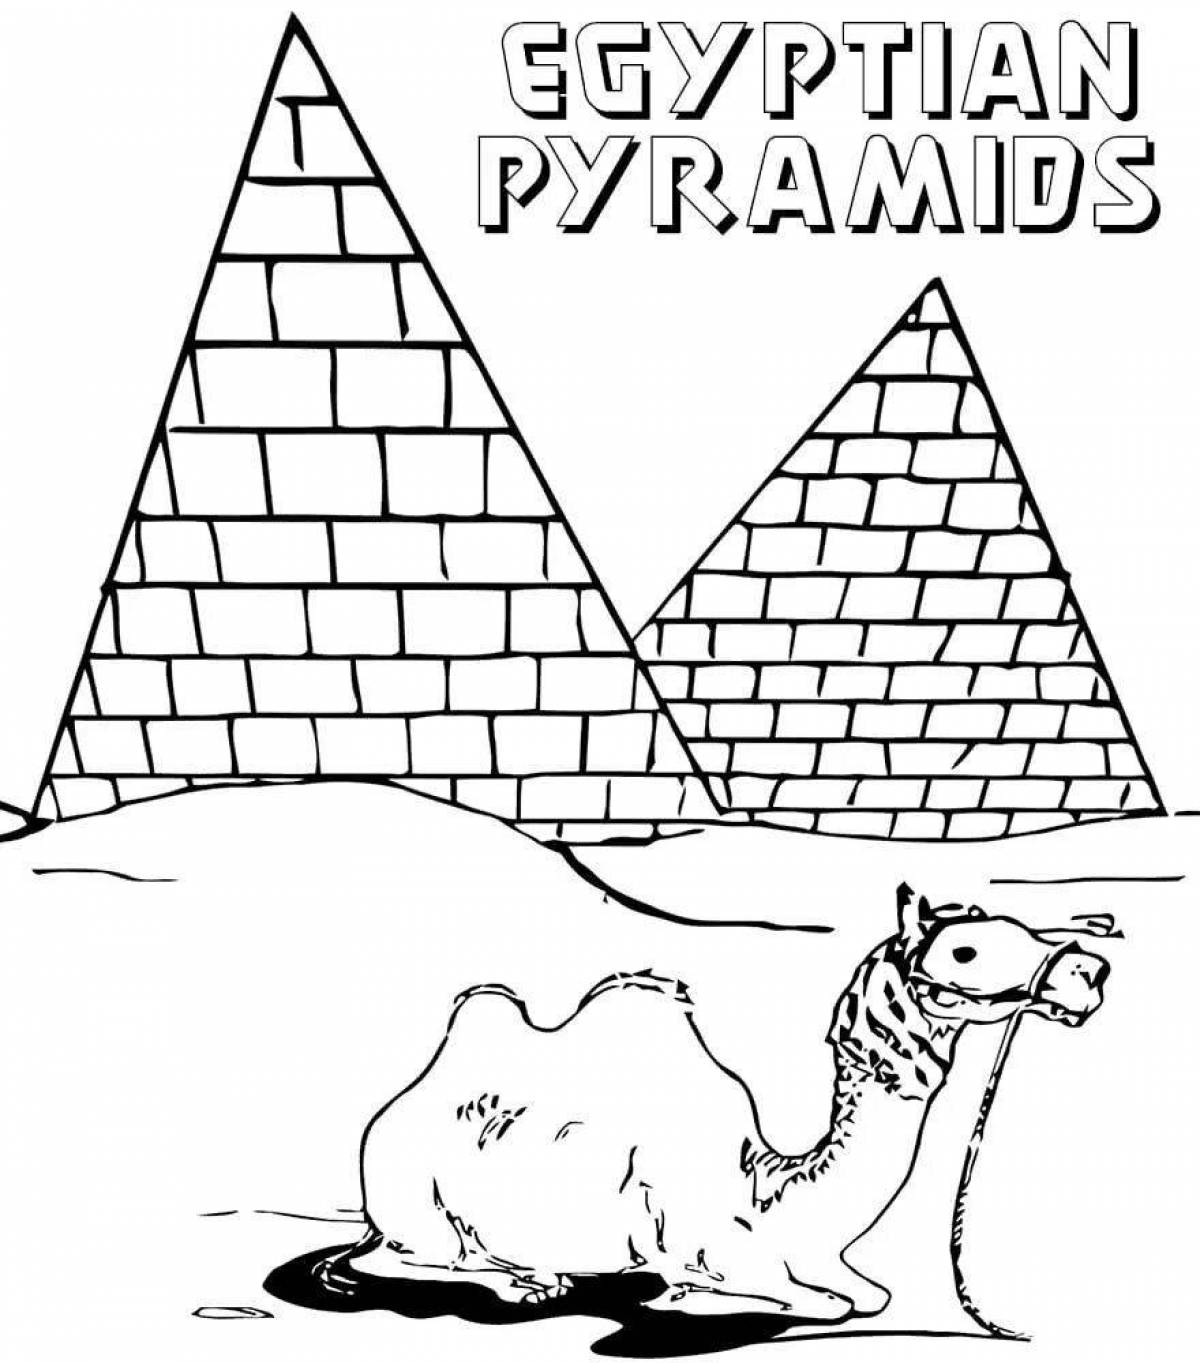 Egyptian pyramids #16